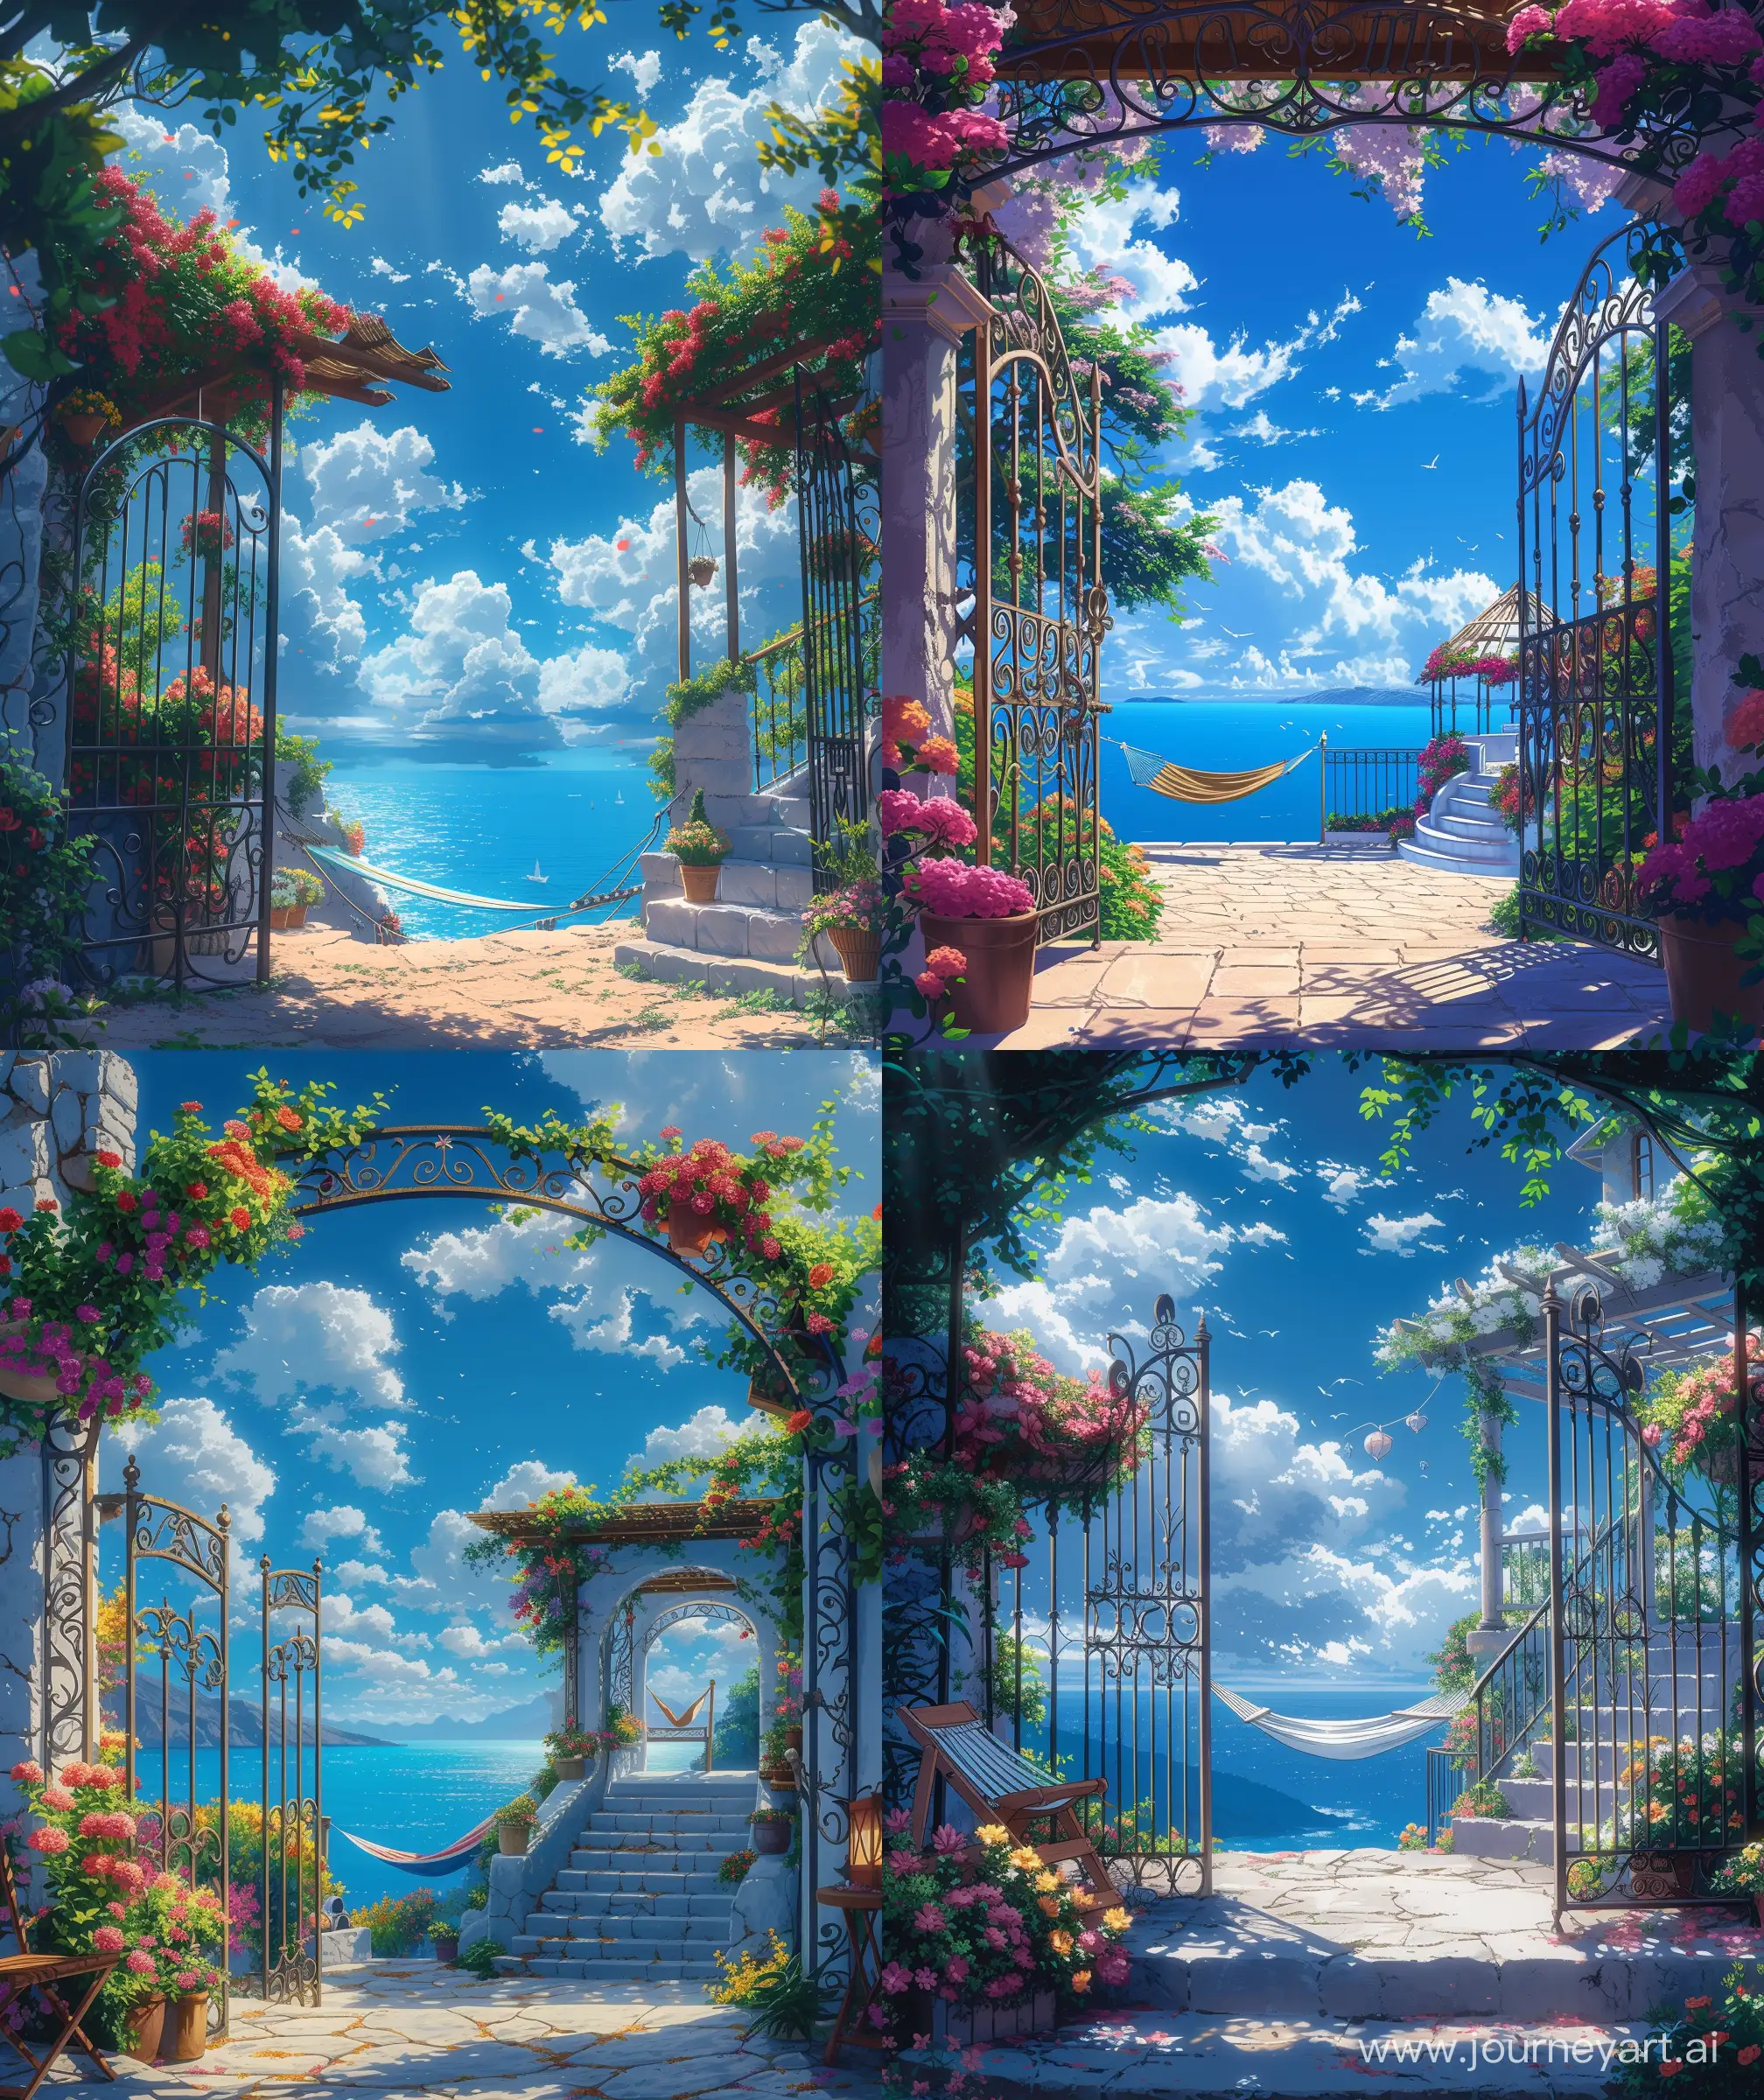 Ghibli-Style-Anime-Scene-Hammock-Relaxation-with-Ocean-View-at-Oia-Island-Santorini